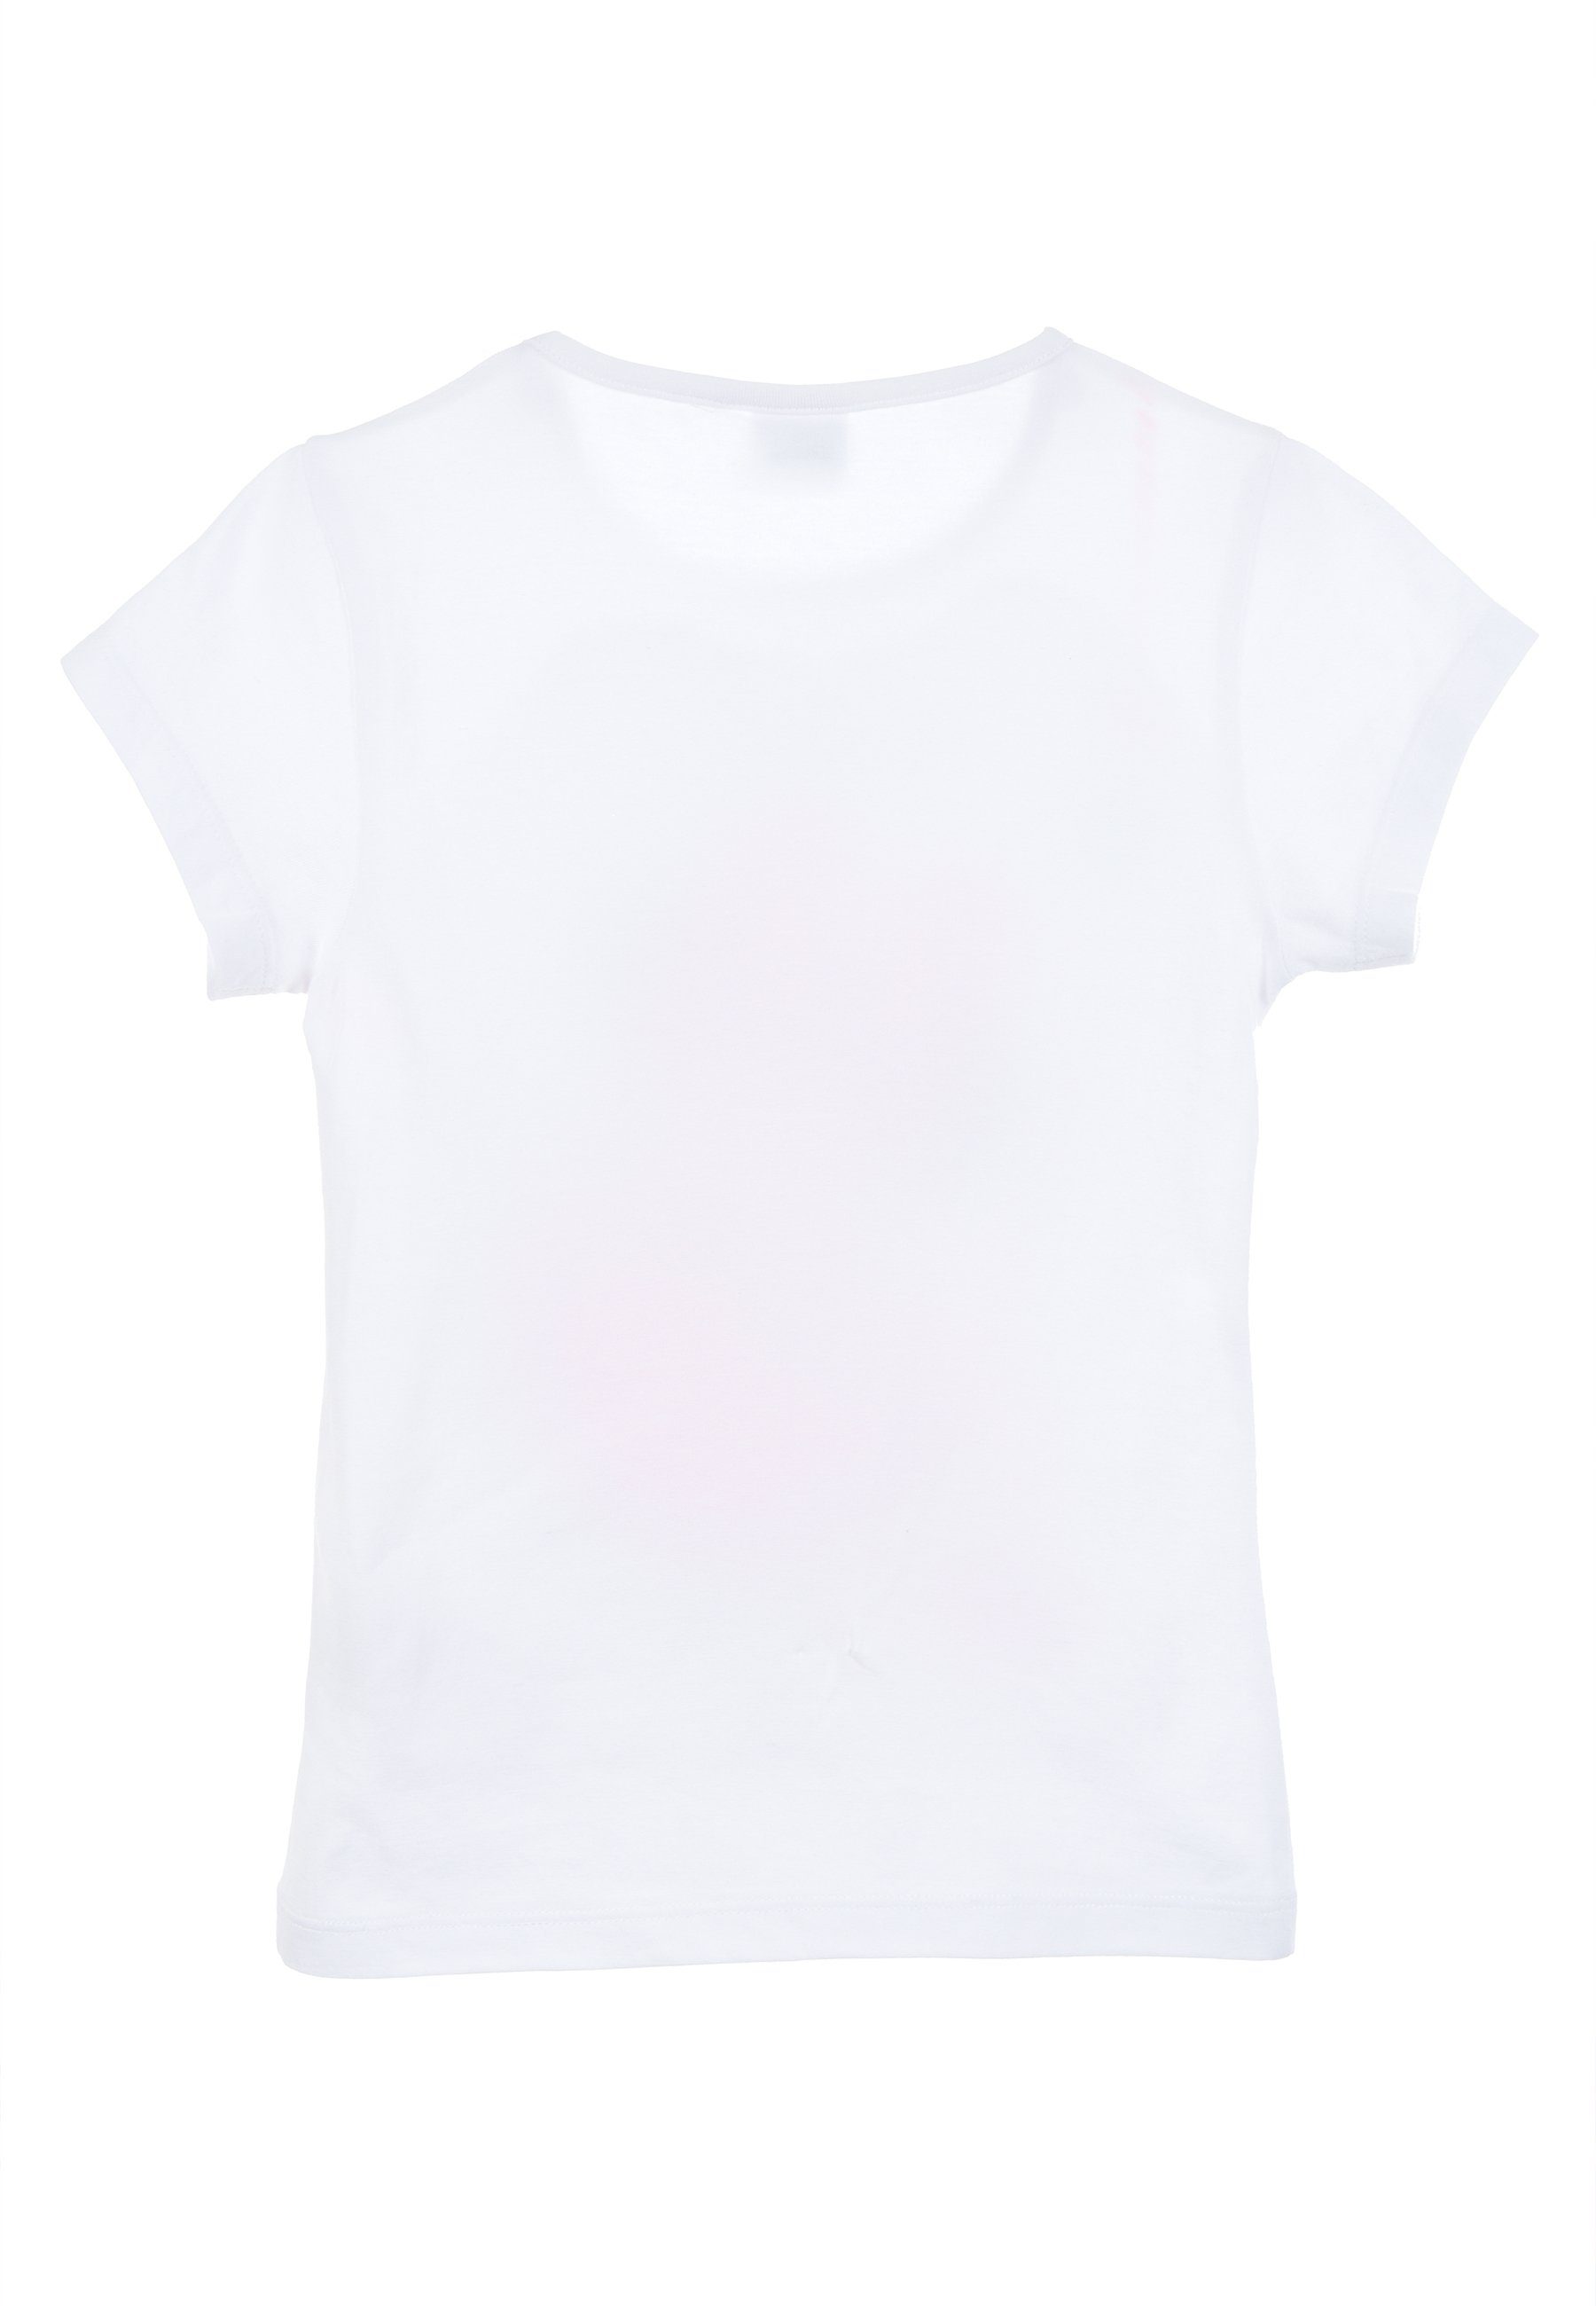 Sommer Mouse Oberteil Kurzarm-Shirt Disney Kinder Mädchen Minnie T-Shirt Weiß